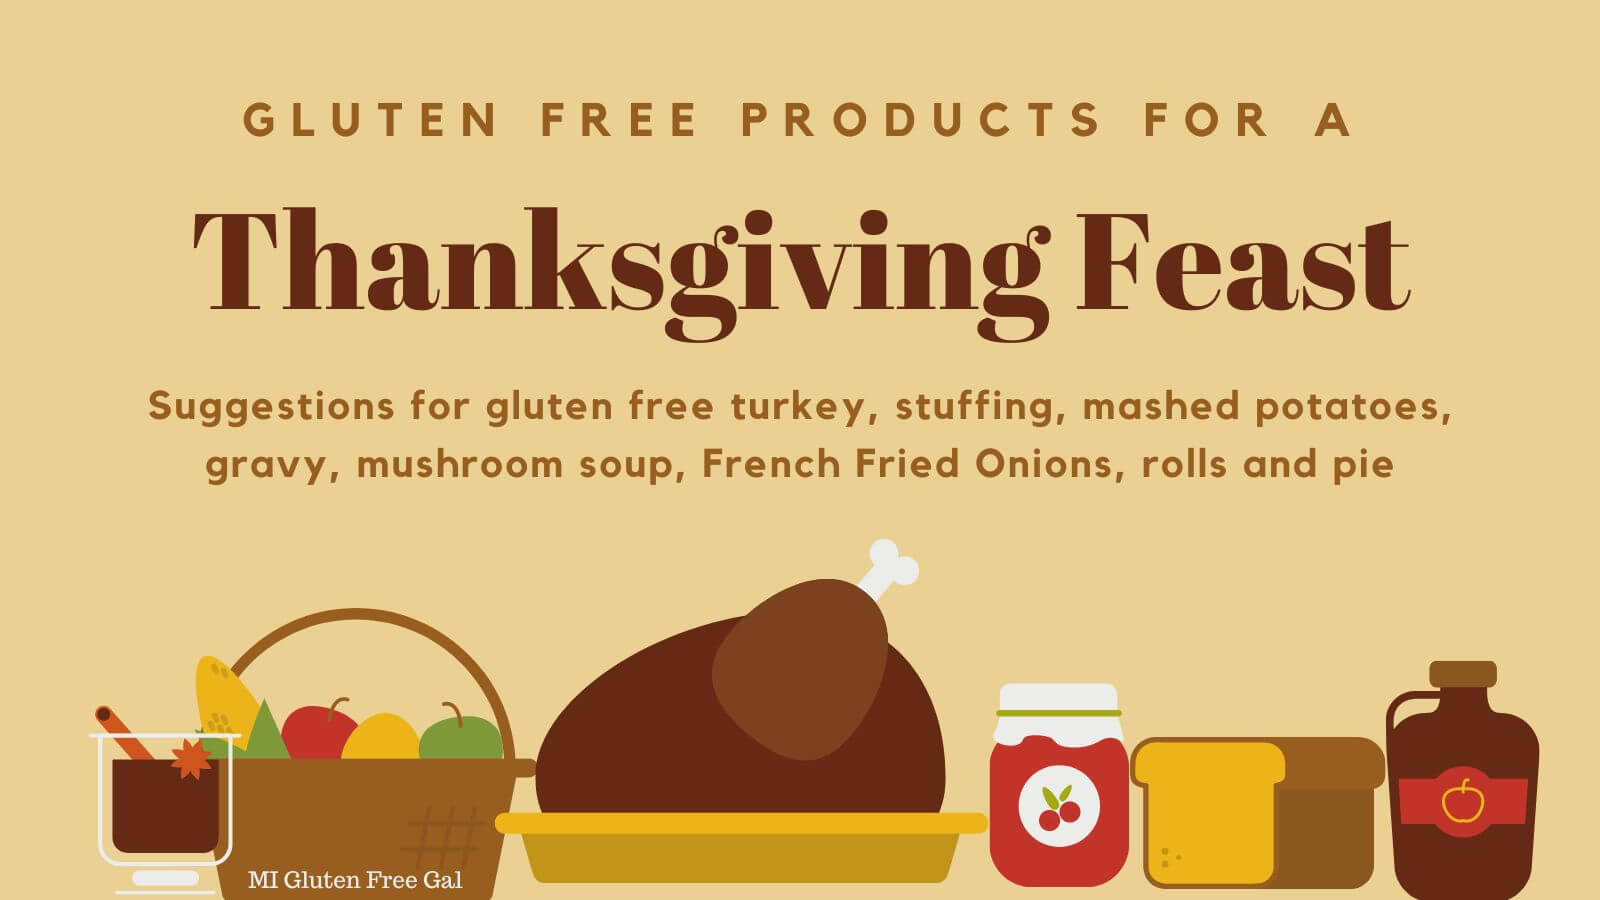 https://miglutenfreegal.com/wp-content/uploads/2022/10/Gluten-Free-products-Thanksgiving-Twitter-1.jpg